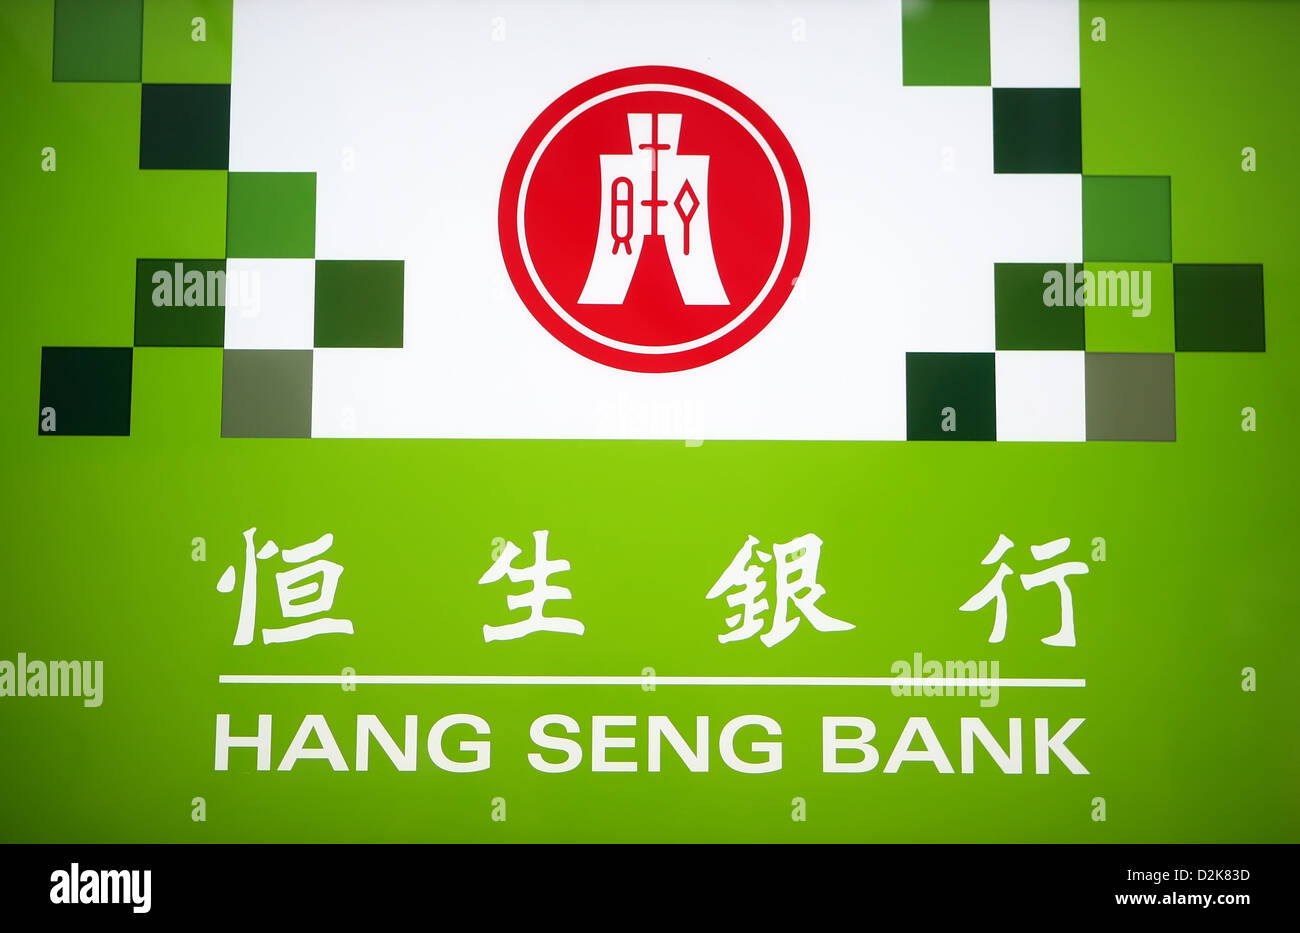 Hang seng bank logo hi-res stock photography and images - Alamy